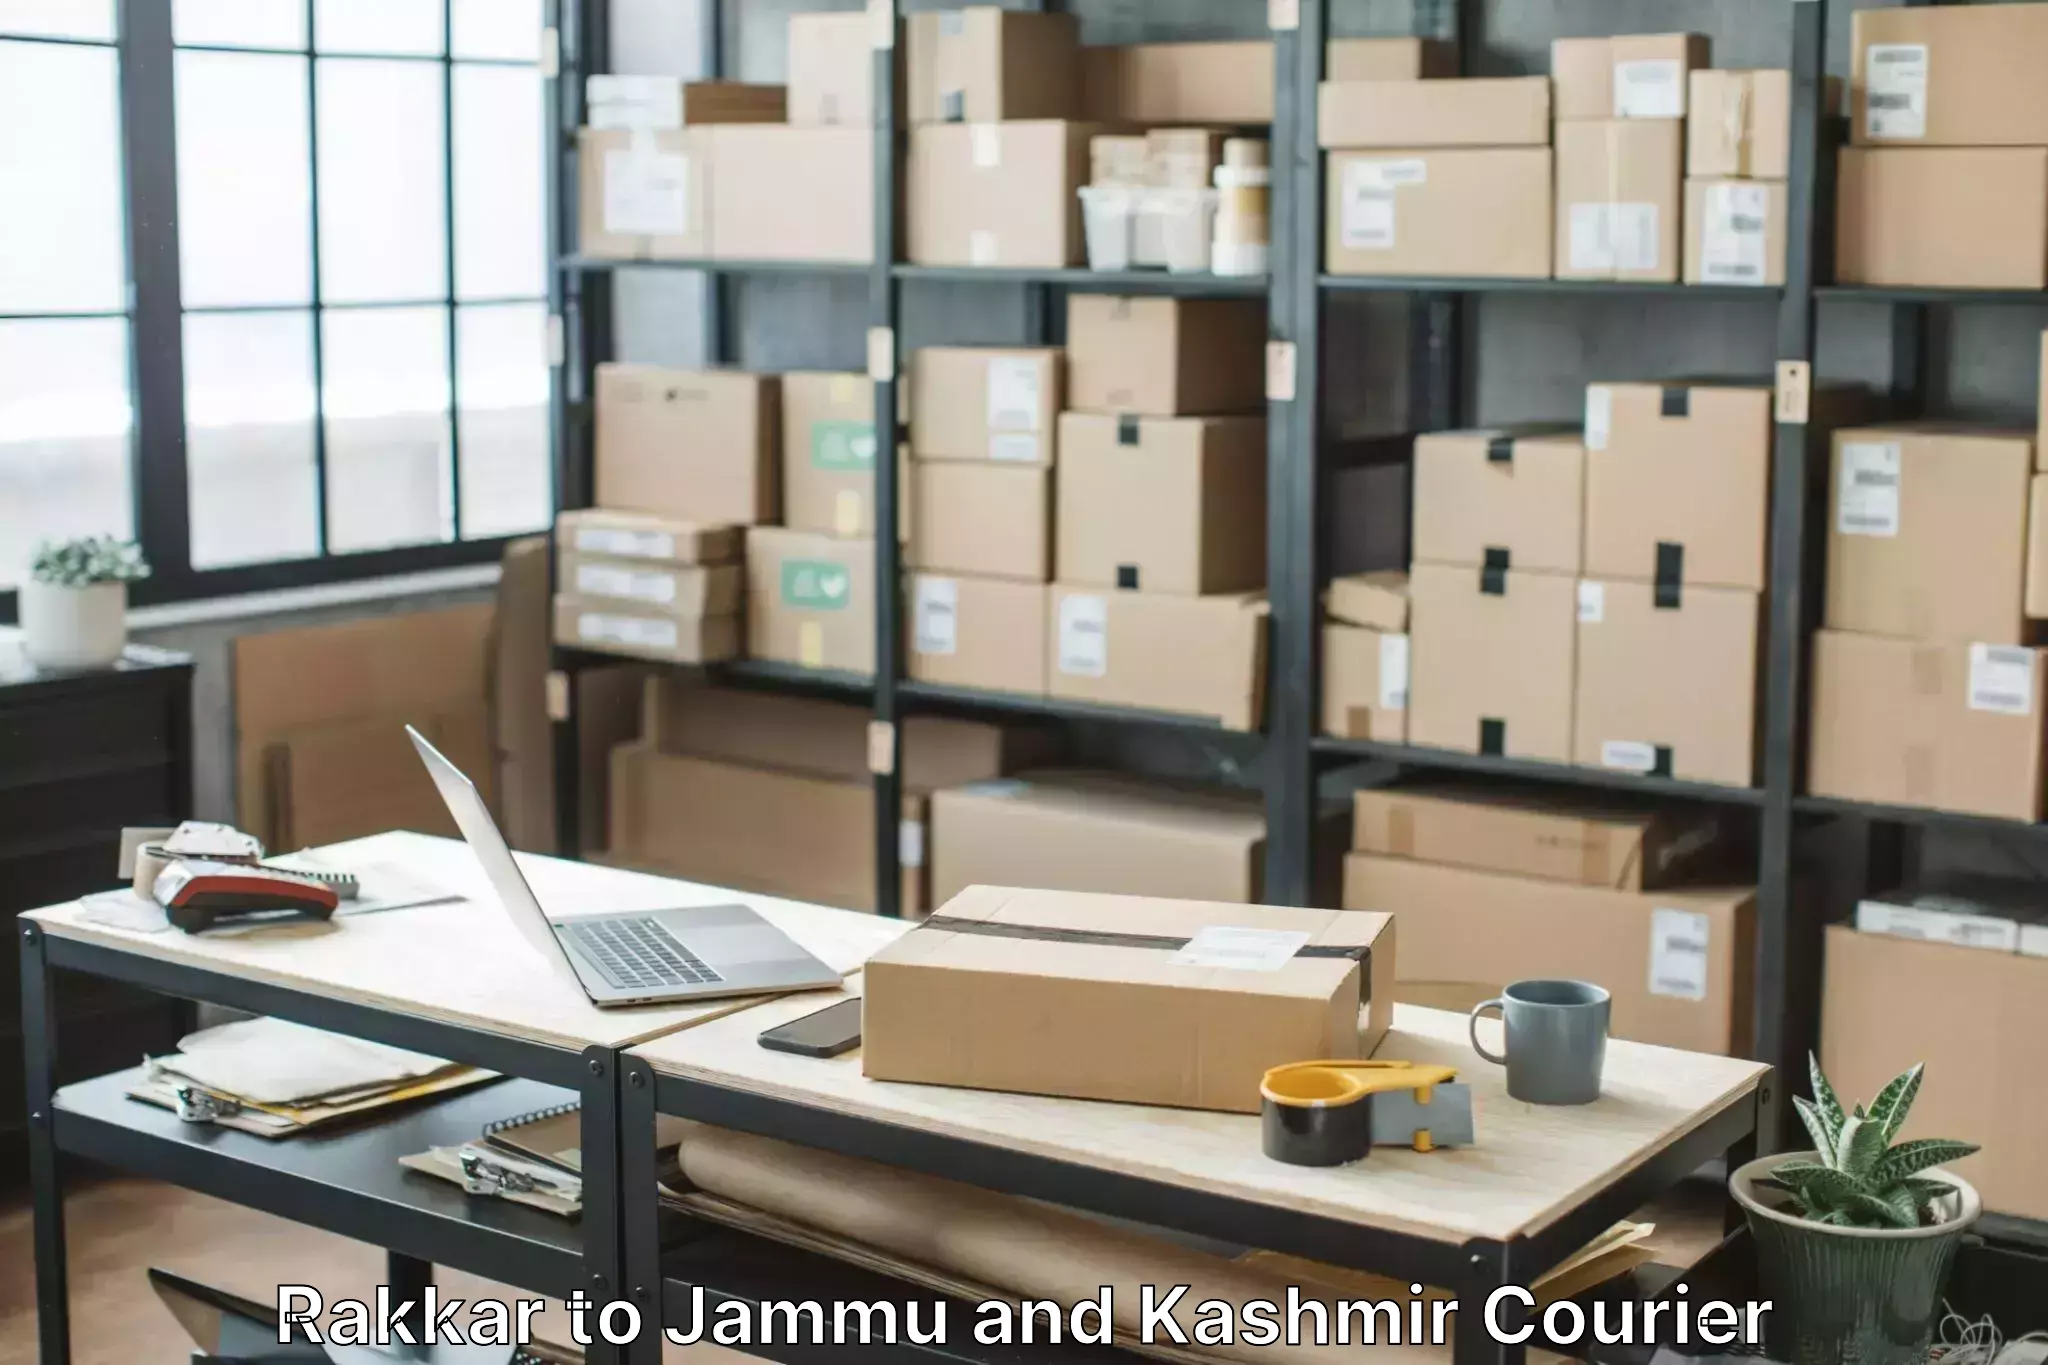 Moving and storage services Rakkar to Jammu and Kashmir